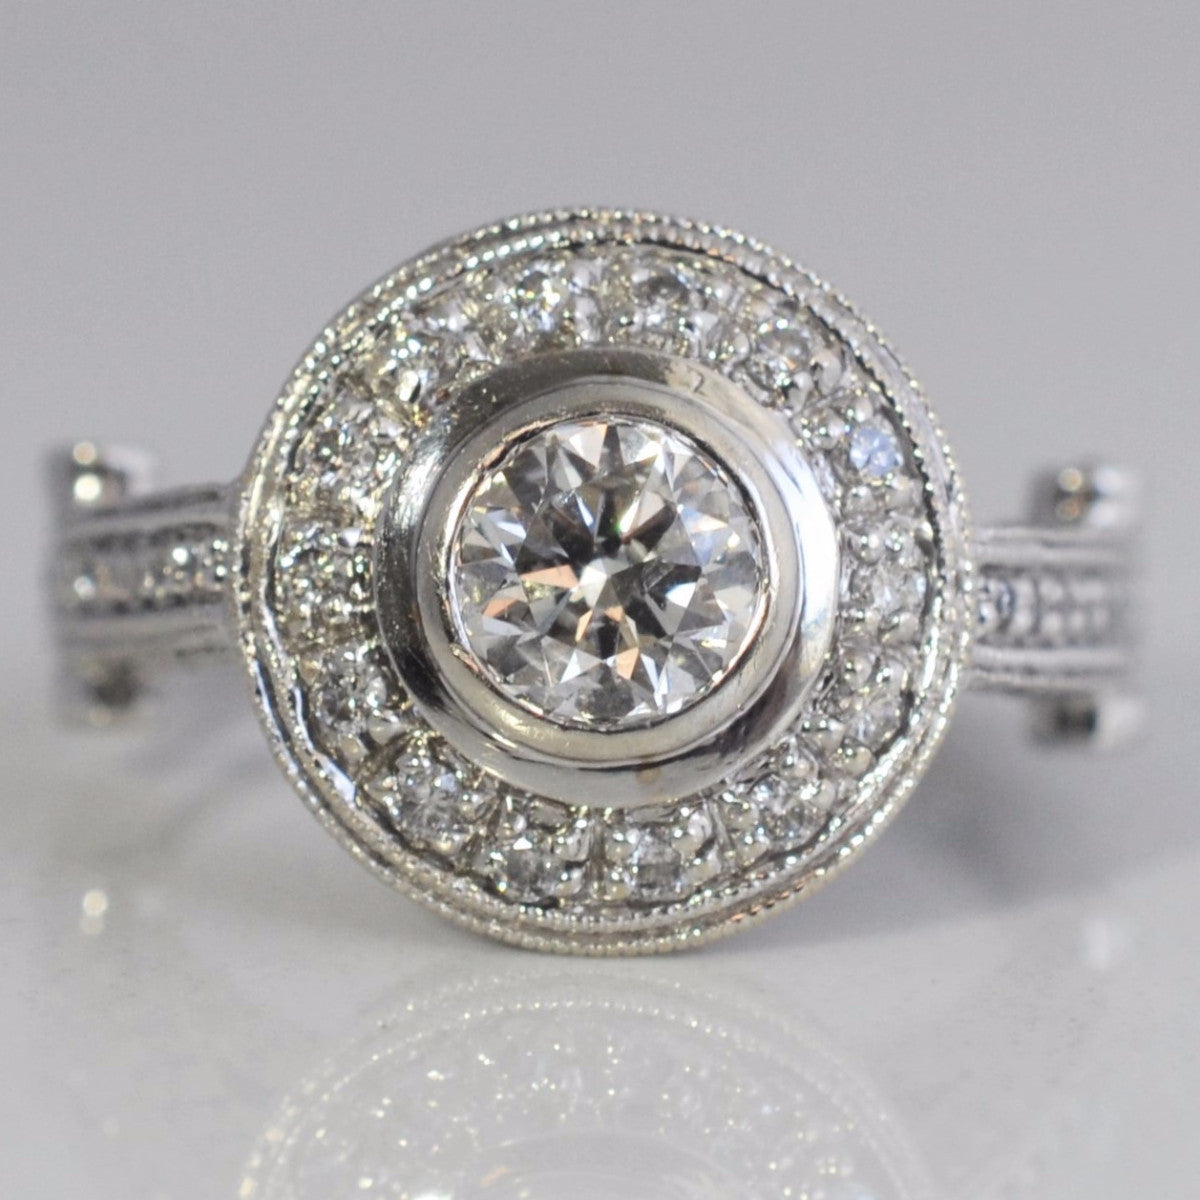 Bezel Set Milgrain Detailed Engagement Ring | 1.10 ctw, SZ 6.25 |